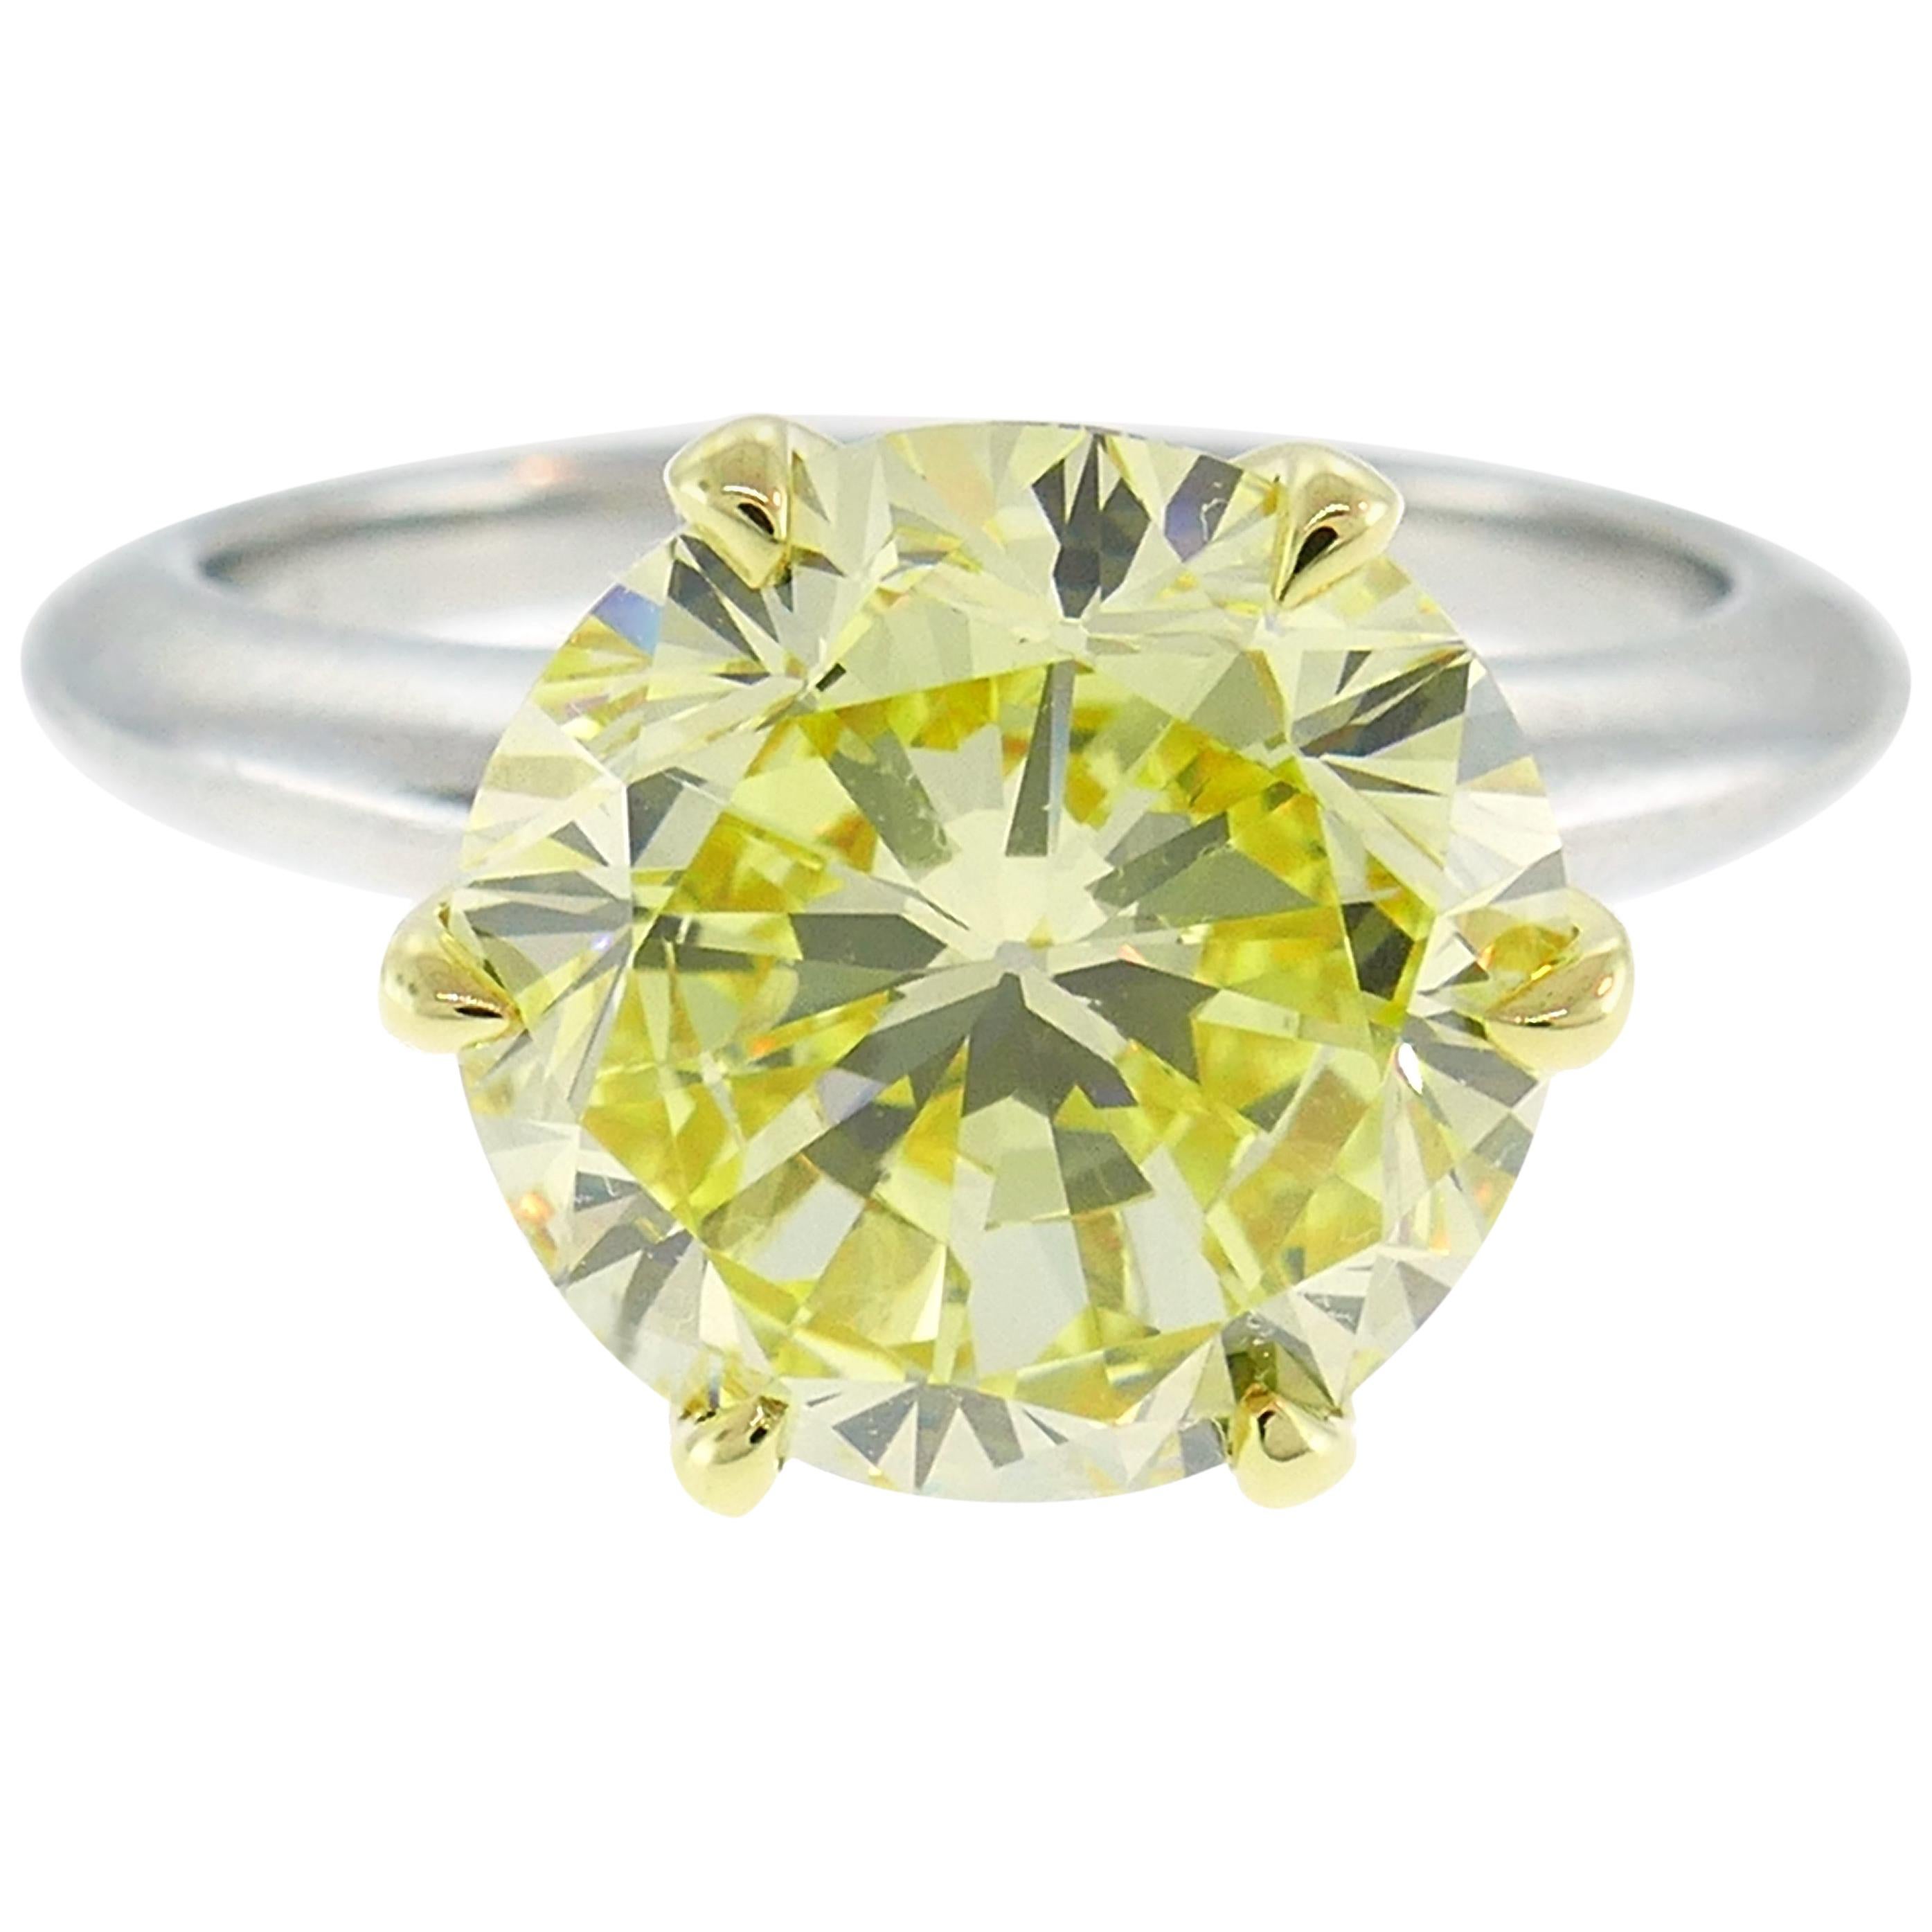 Tiffany & Co. Fancy Intense Yellow Diamond Platinum Ring 4.02-carat VVS1 GIA